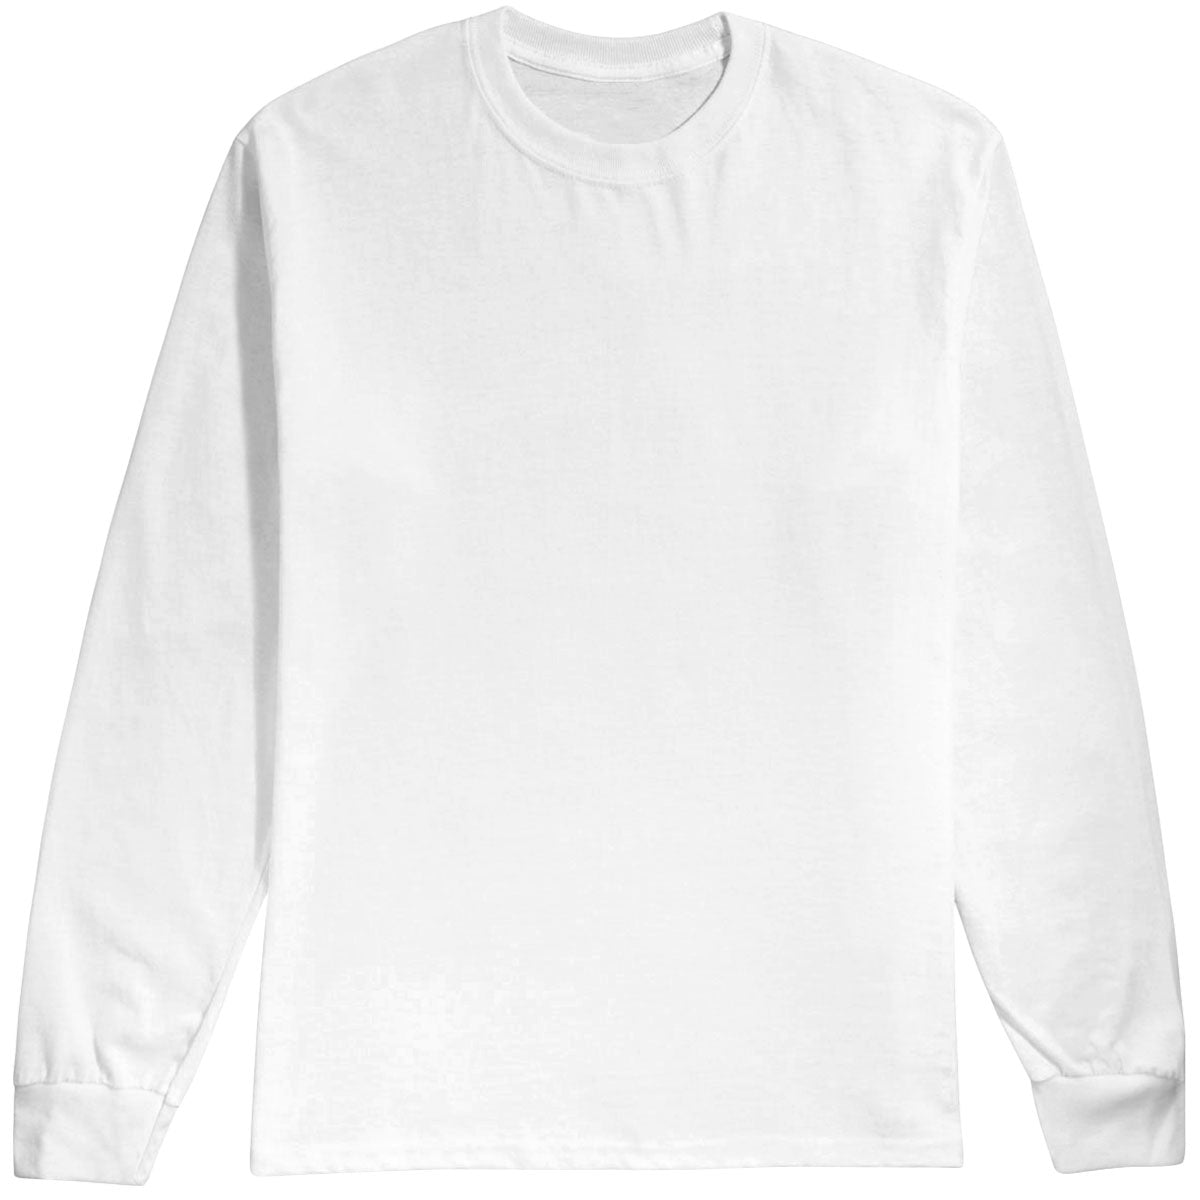 Alien Workshop Triad Sticker Long Sleeve T-Shirt - White - XL image 1